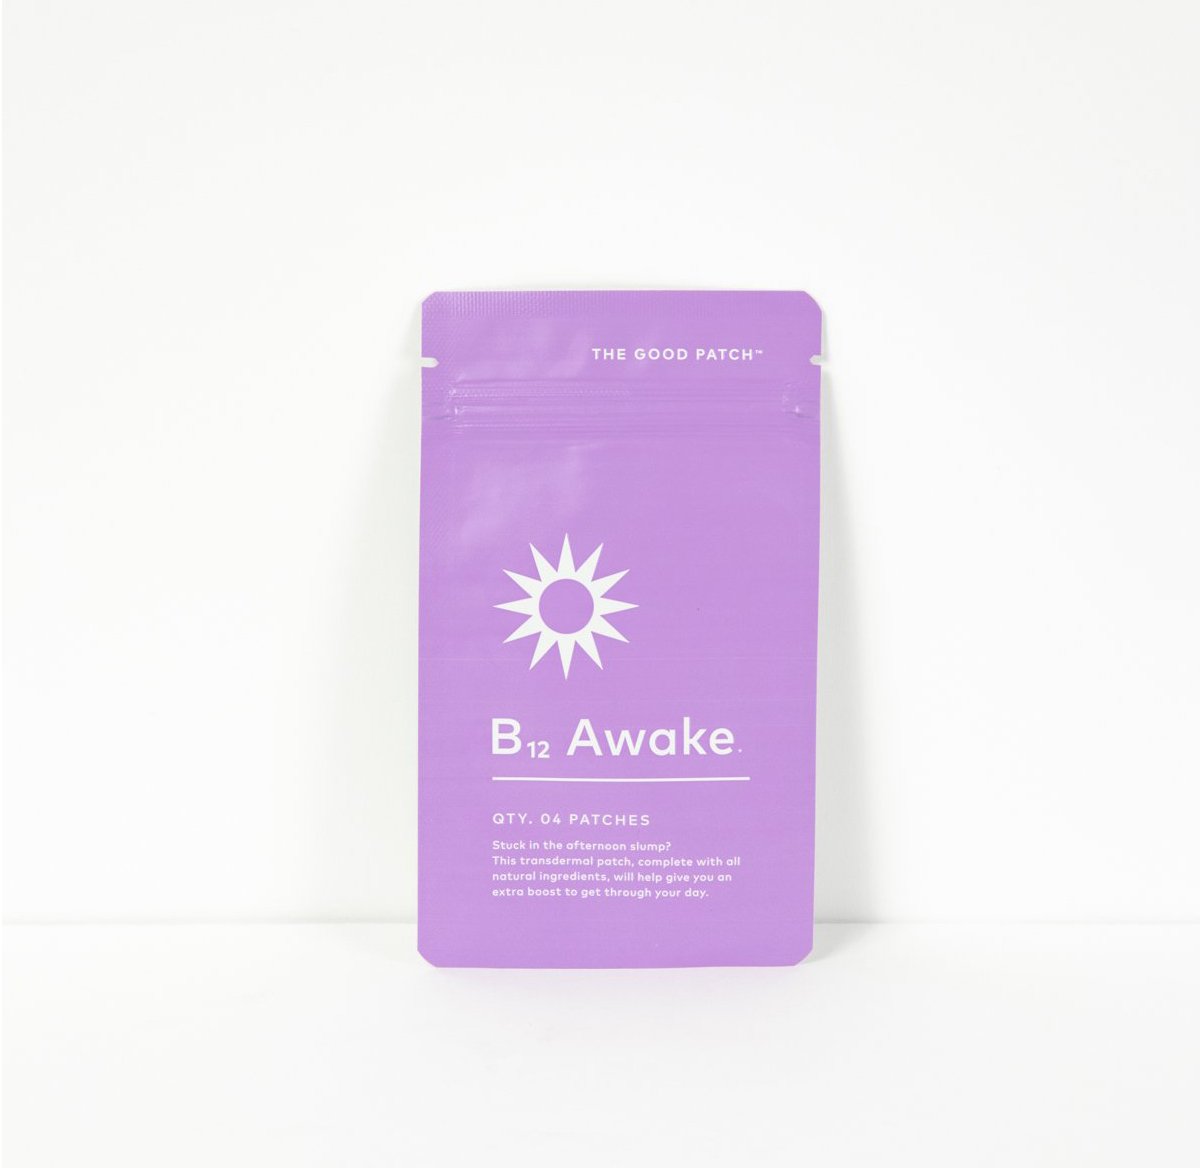 B12 Awake | The Good Patch